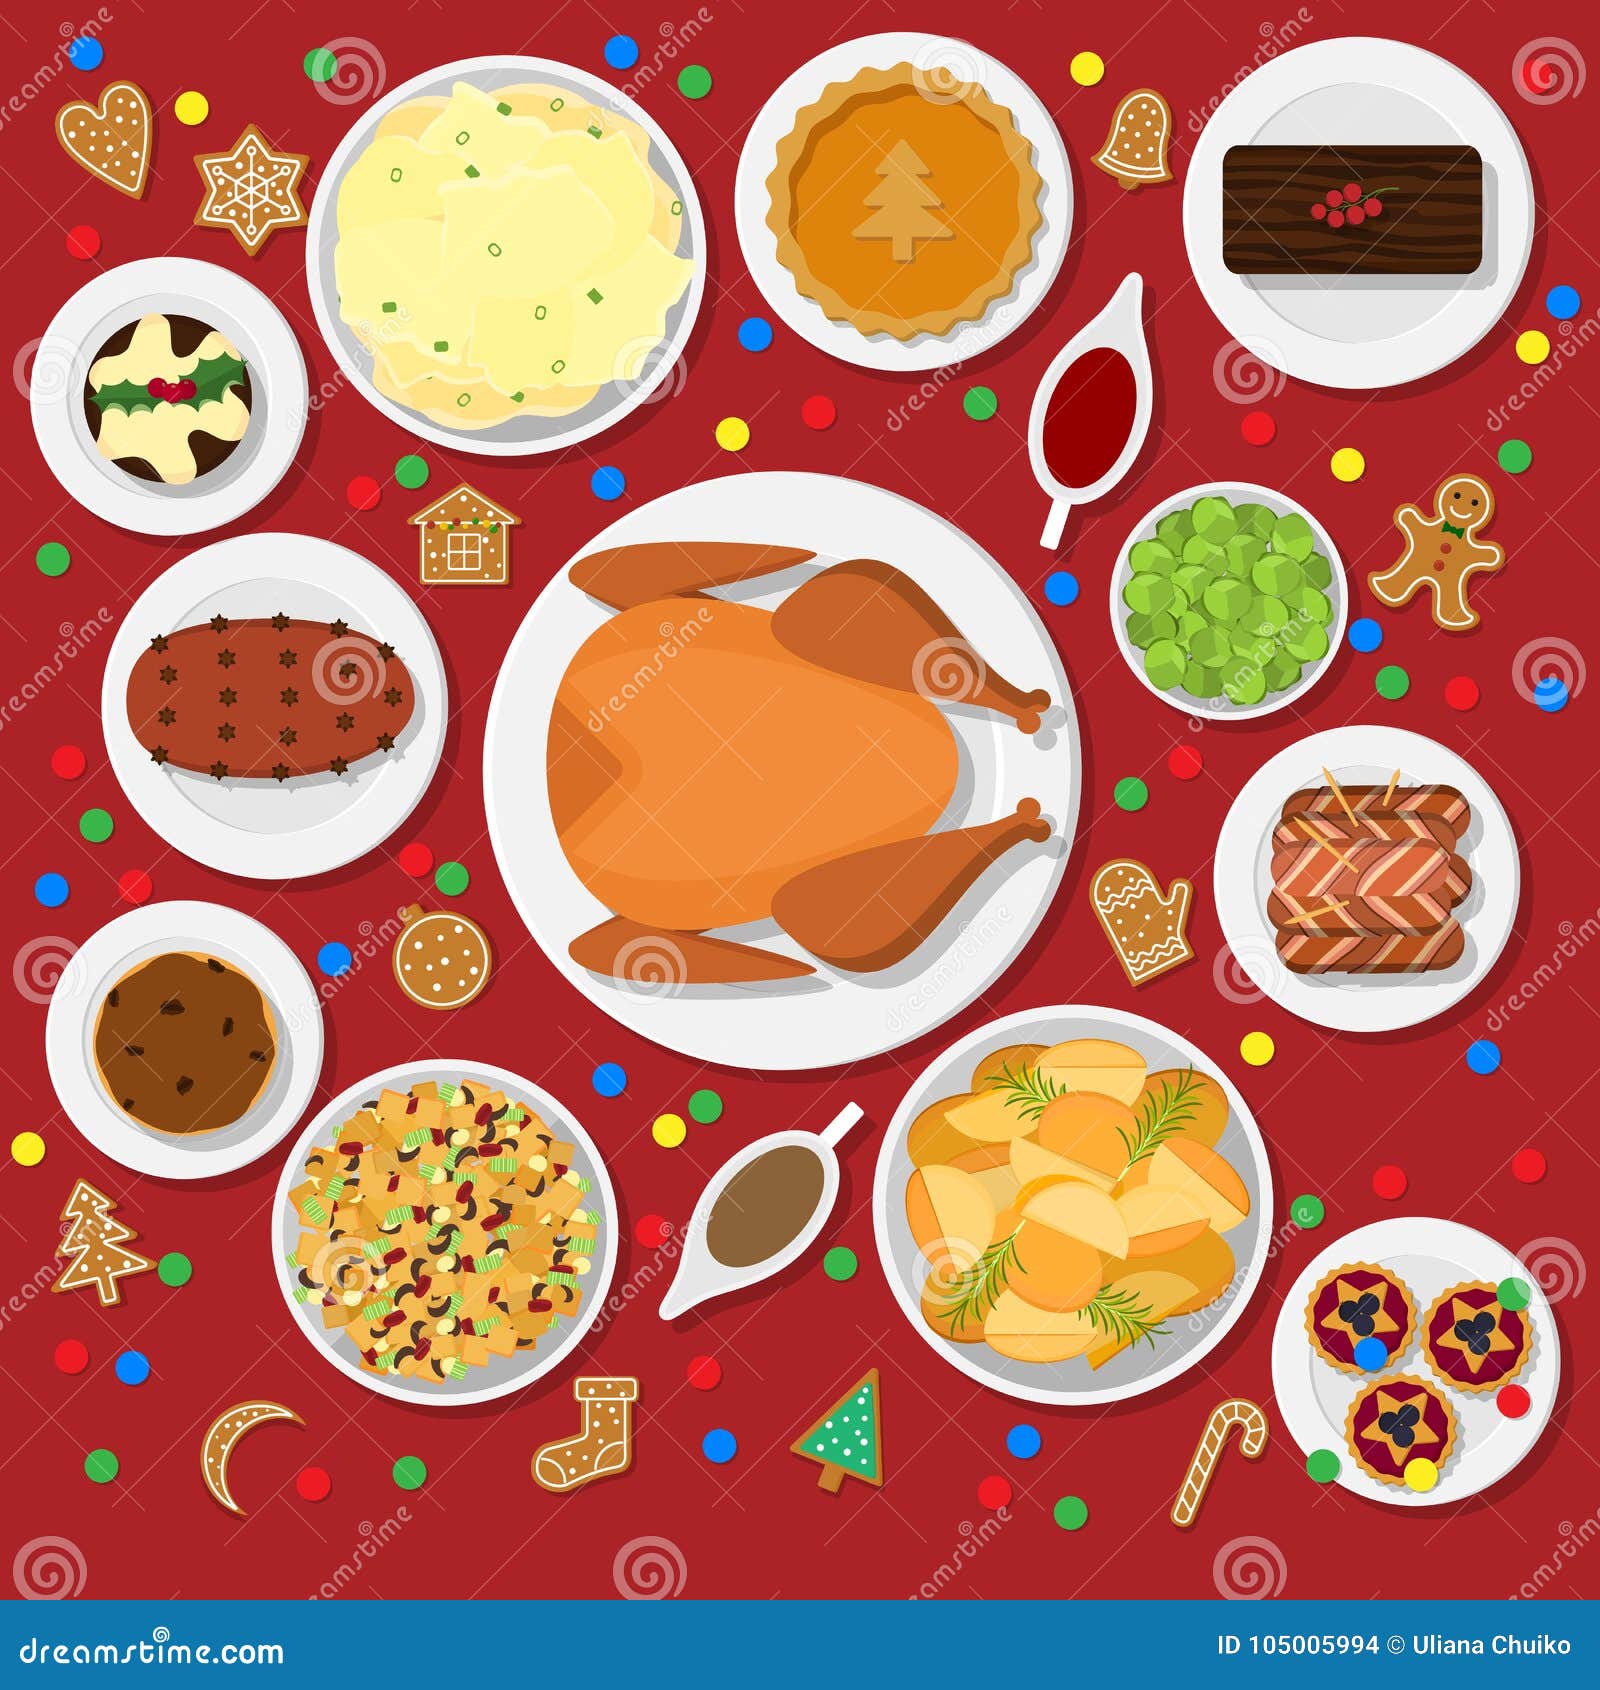 Holiday dinner table stock vector. Illustration of festive - 105005994